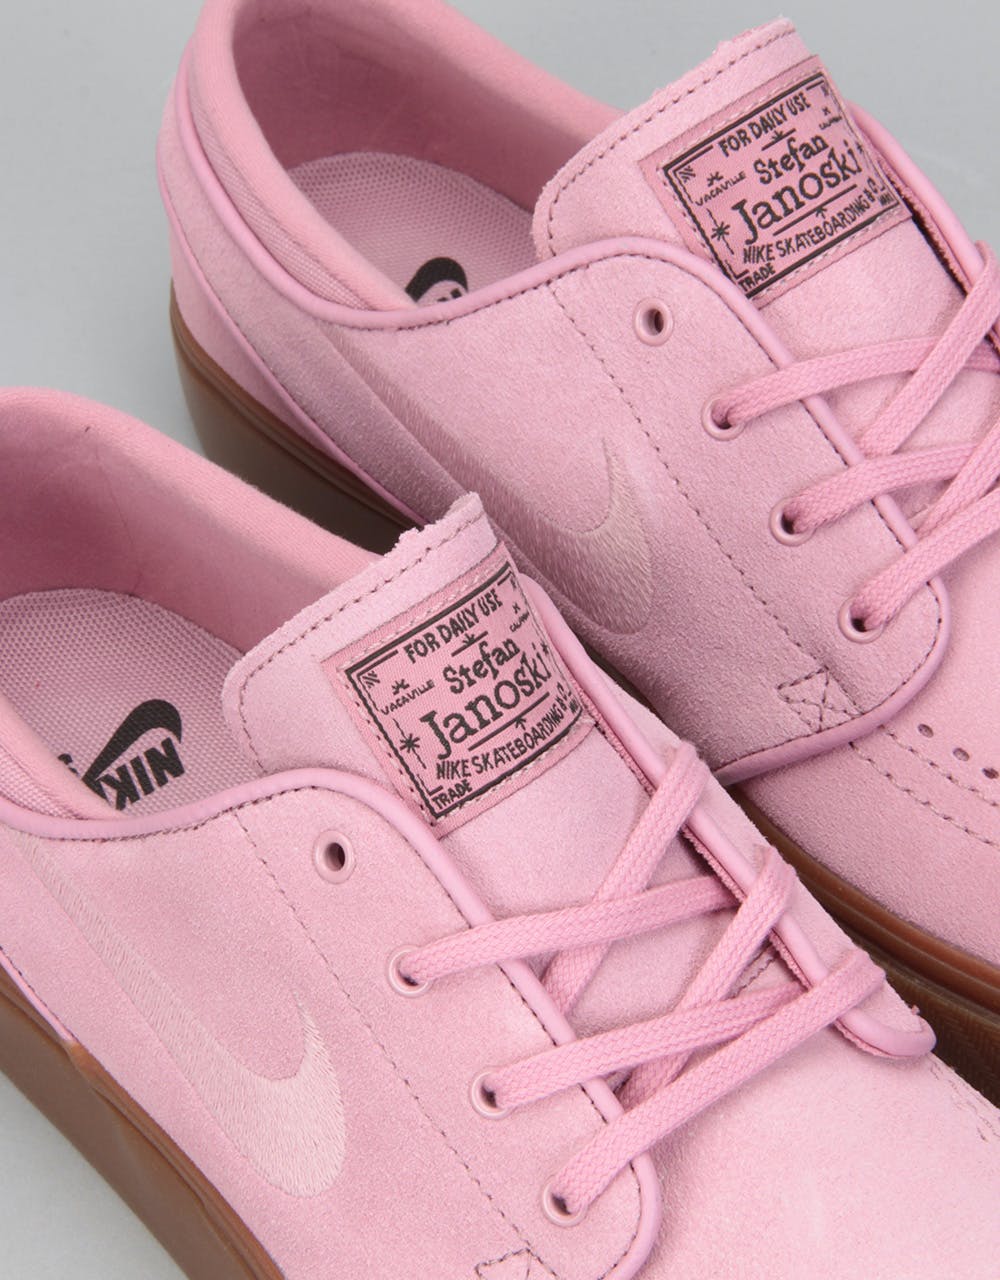 Nike SB Zoom Stefan Janoski Skate Shoes - Elemental Pink/Sequoia